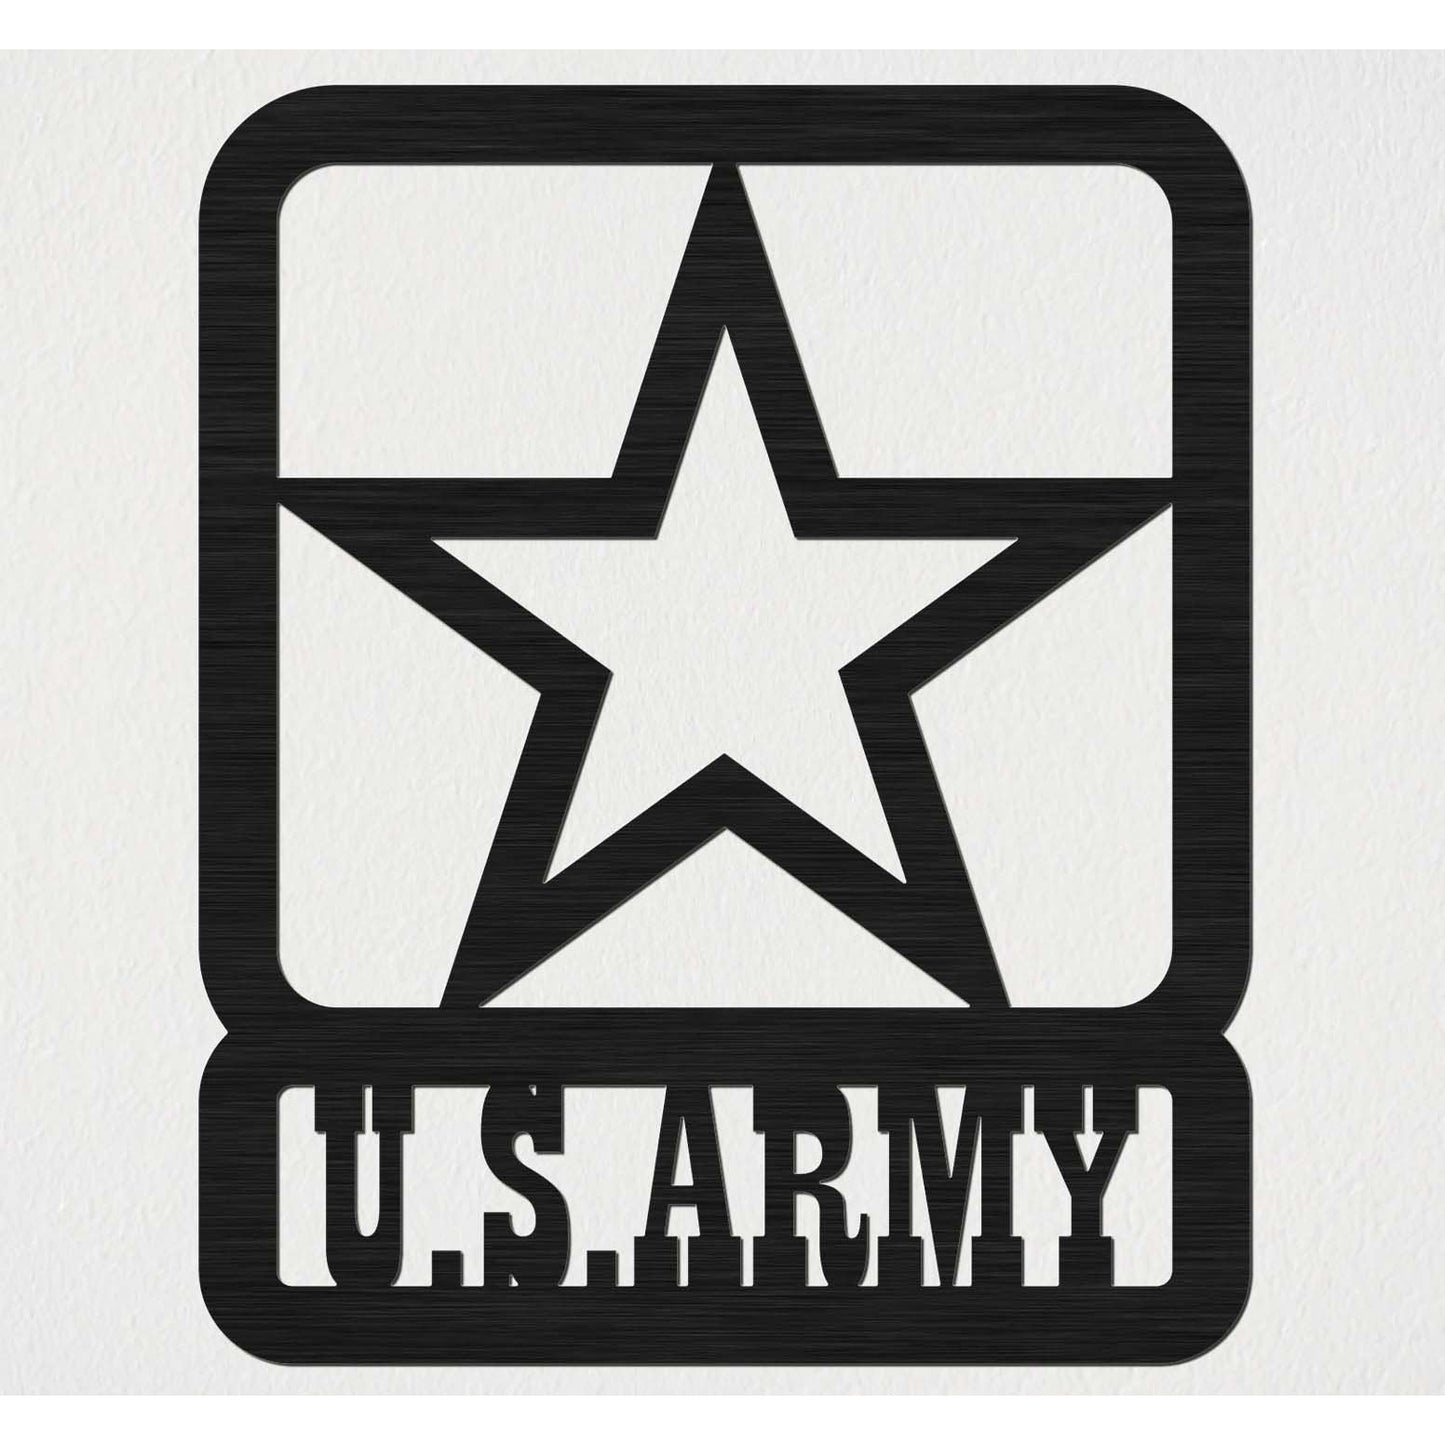 US Army Star Badge-DXFforCNC.com-DXF Files cut ready cnc machines